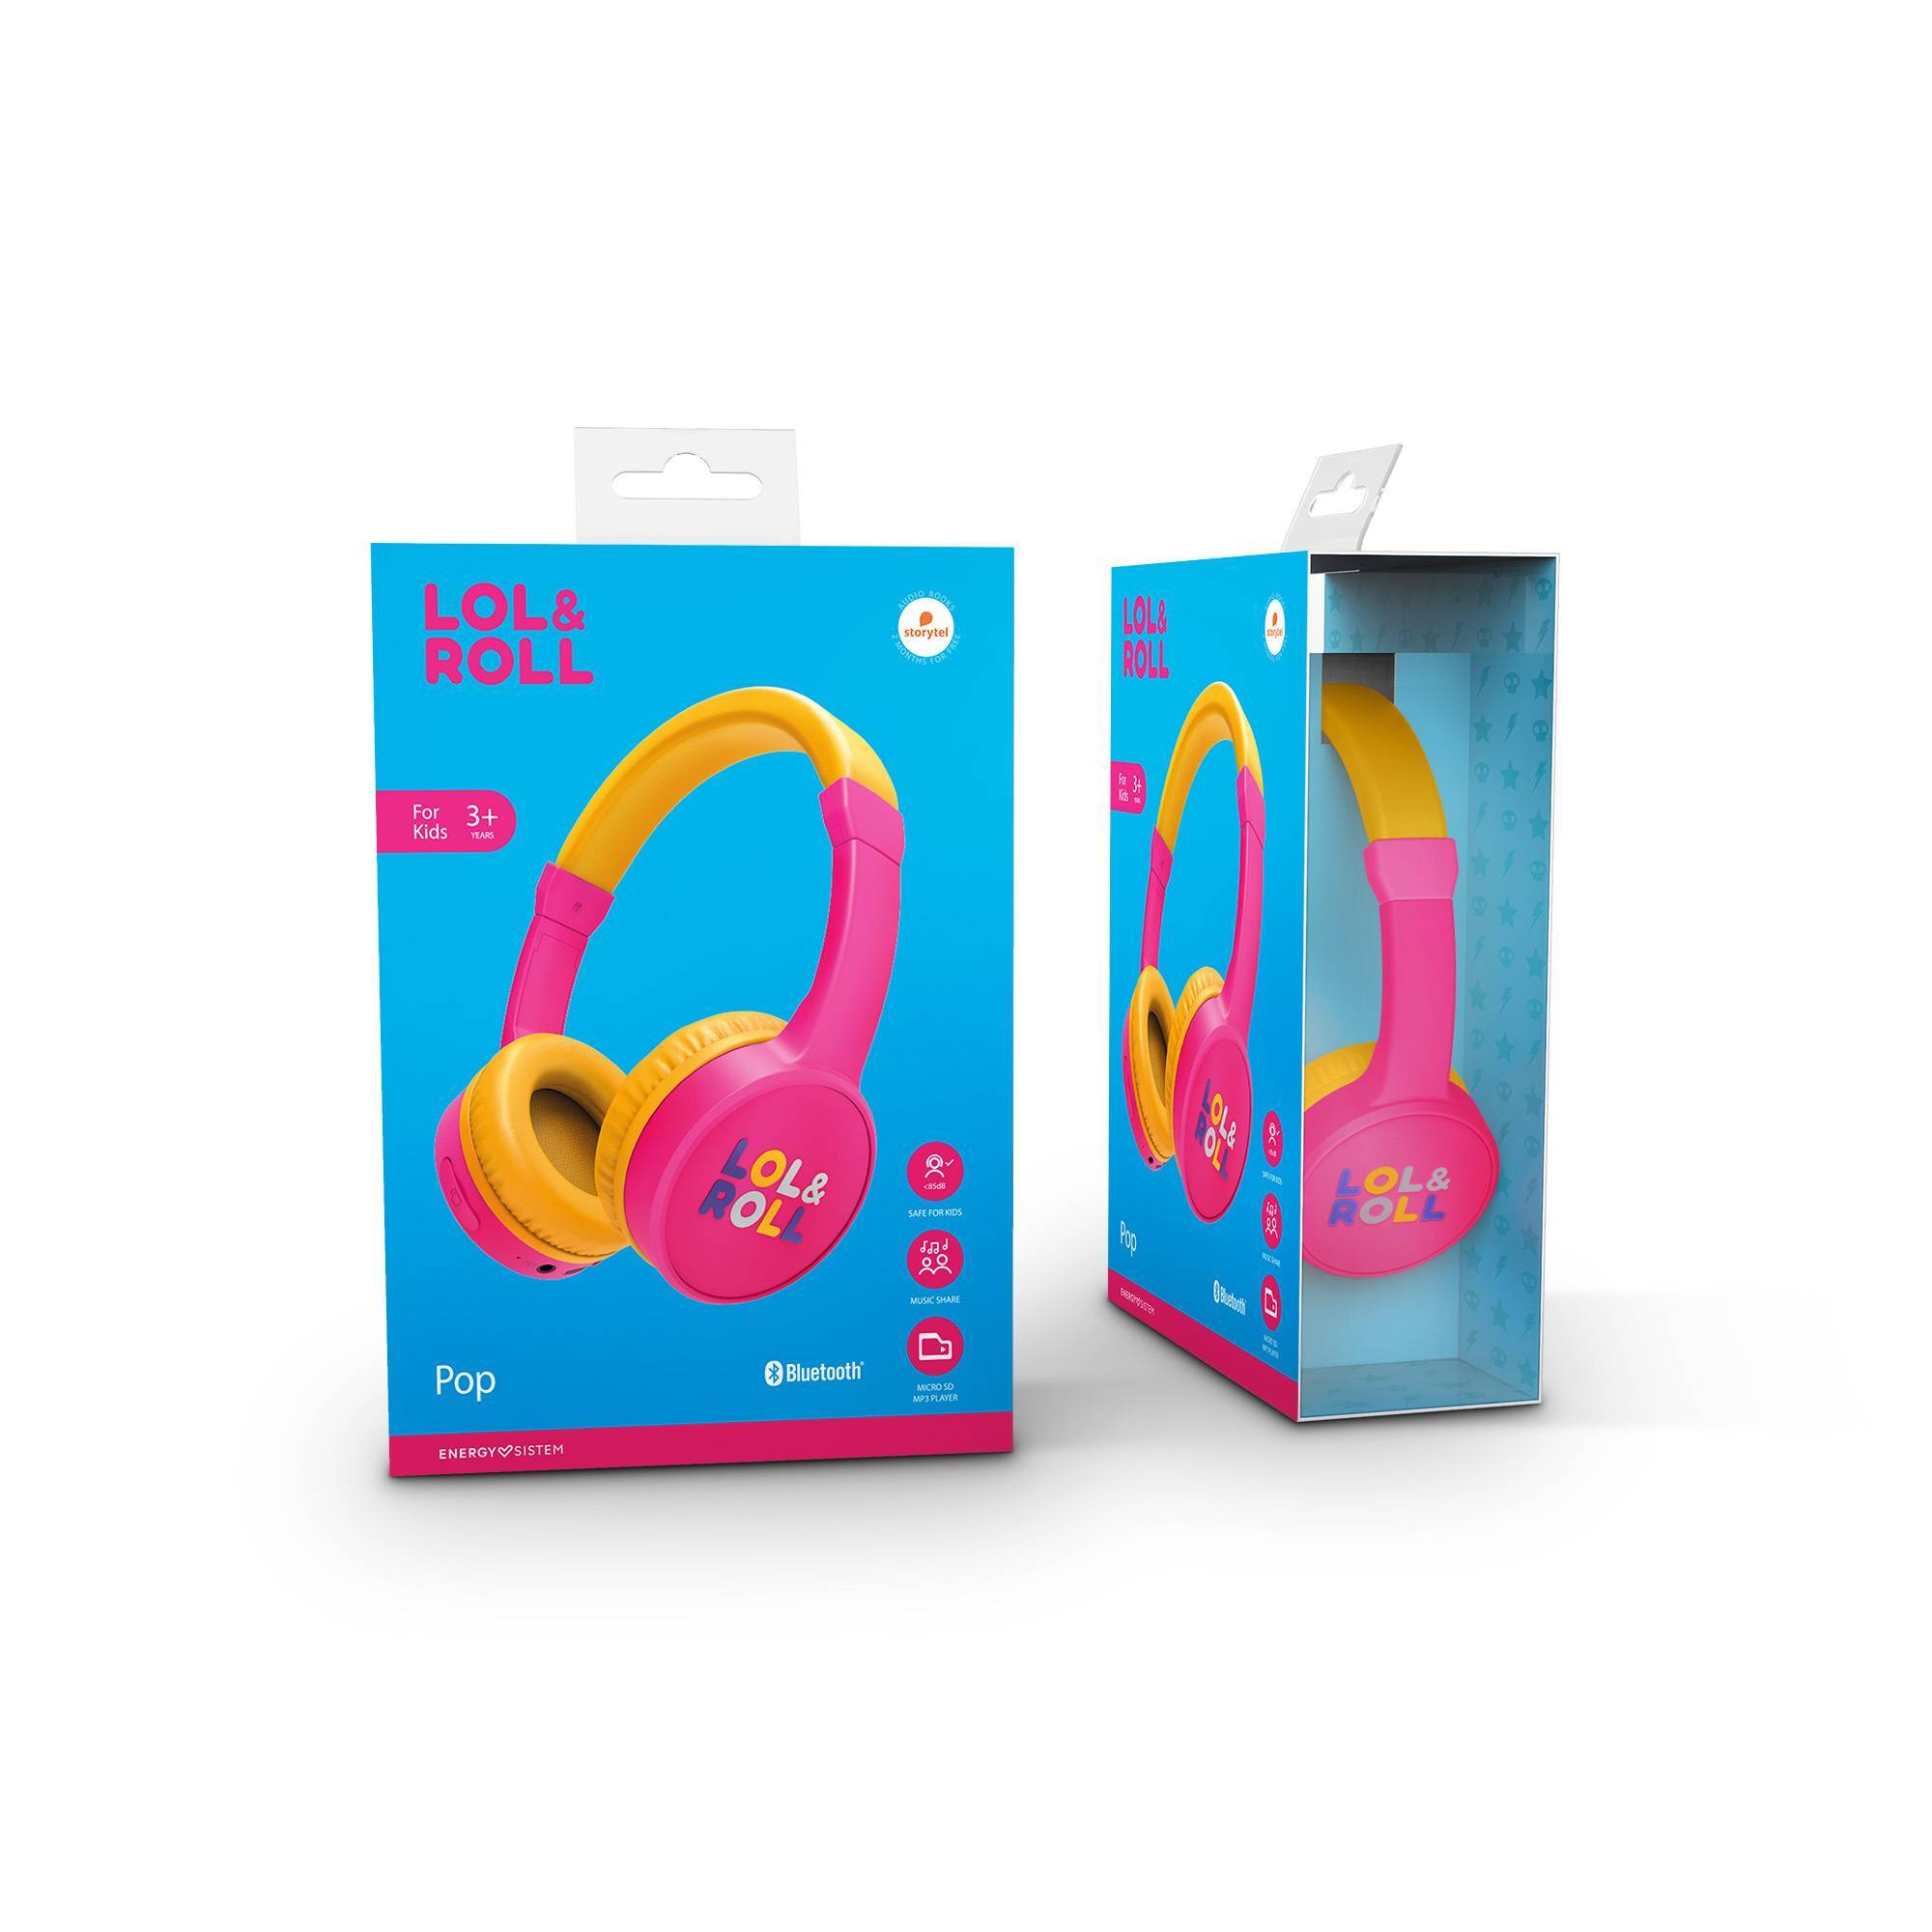 Blue Lol&Roll Pop Kids Bluetooth Headphones' packaging